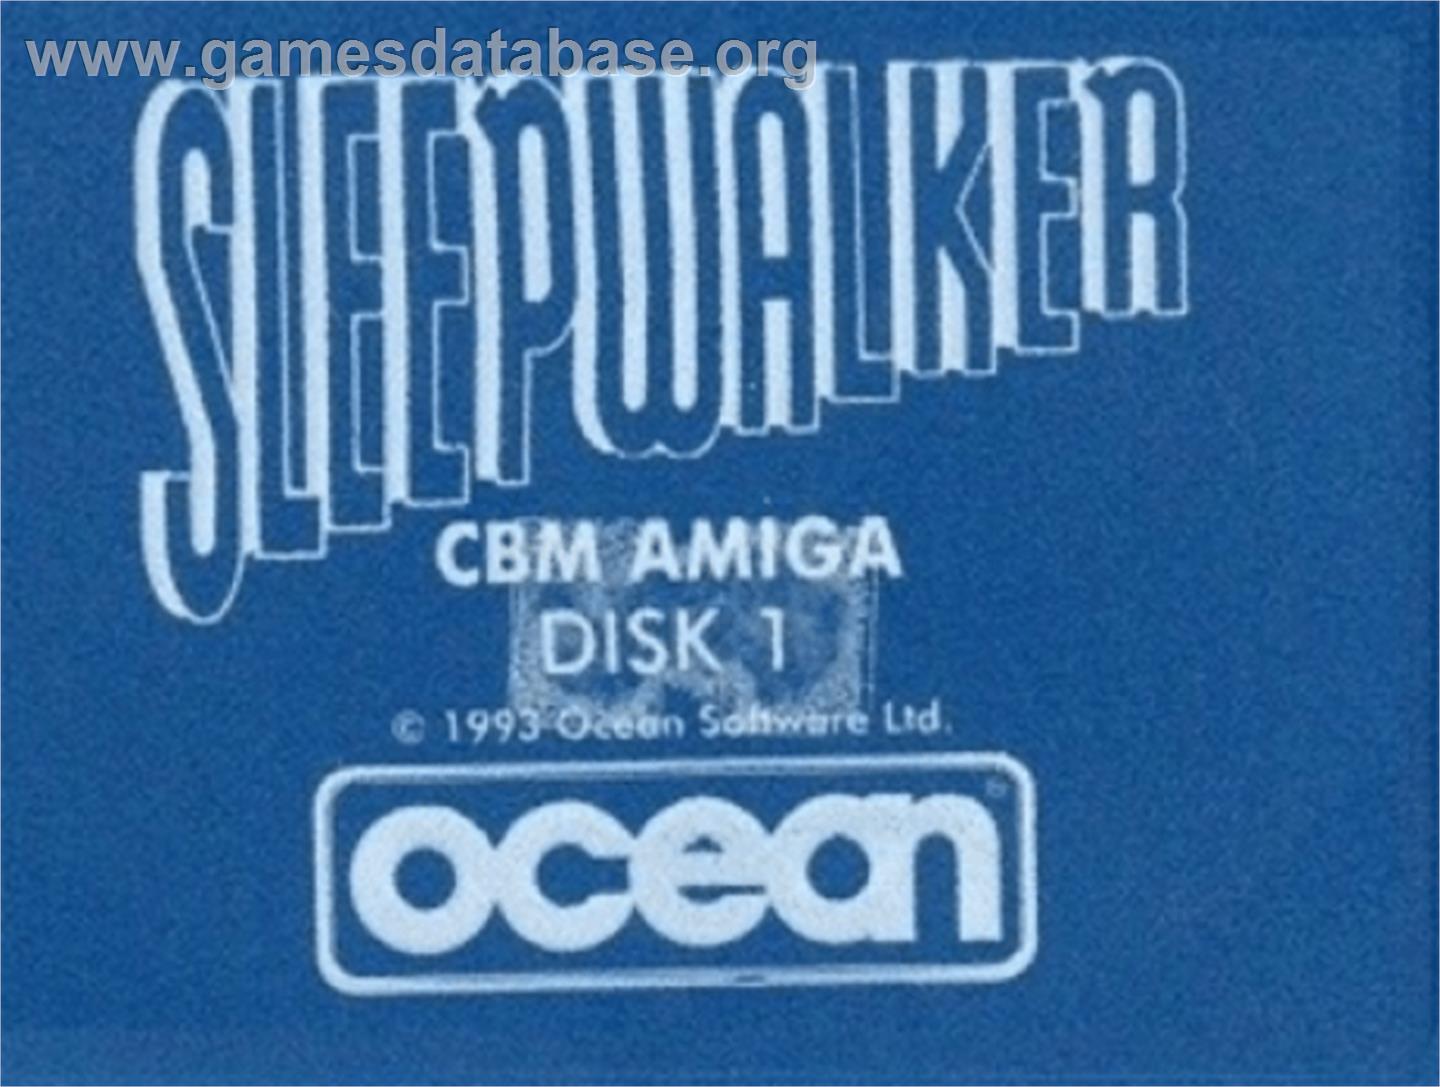 Sleepwalker - Commodore Amiga - Artwork - Cartridge Top